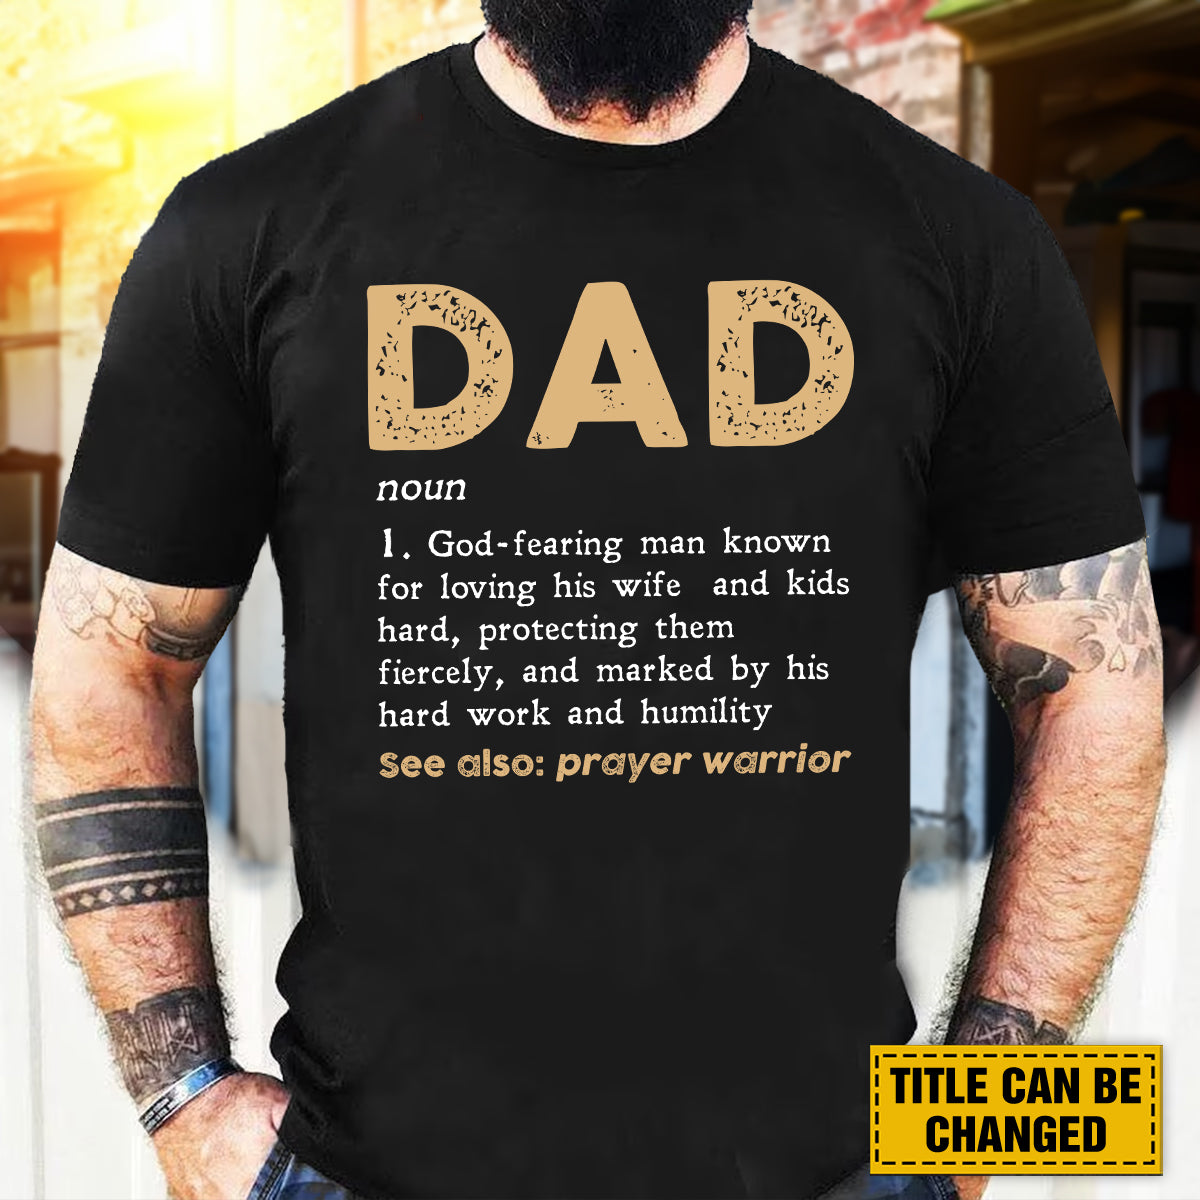 Teesdily | Dad Definition Customized Shirt, Prayer Warrior Men's Shirt, Father Day Gifts, God Fearing Man Unisex Tshirt Hoodie Sweatshirt Size S-5XL / Mug 11-15oz